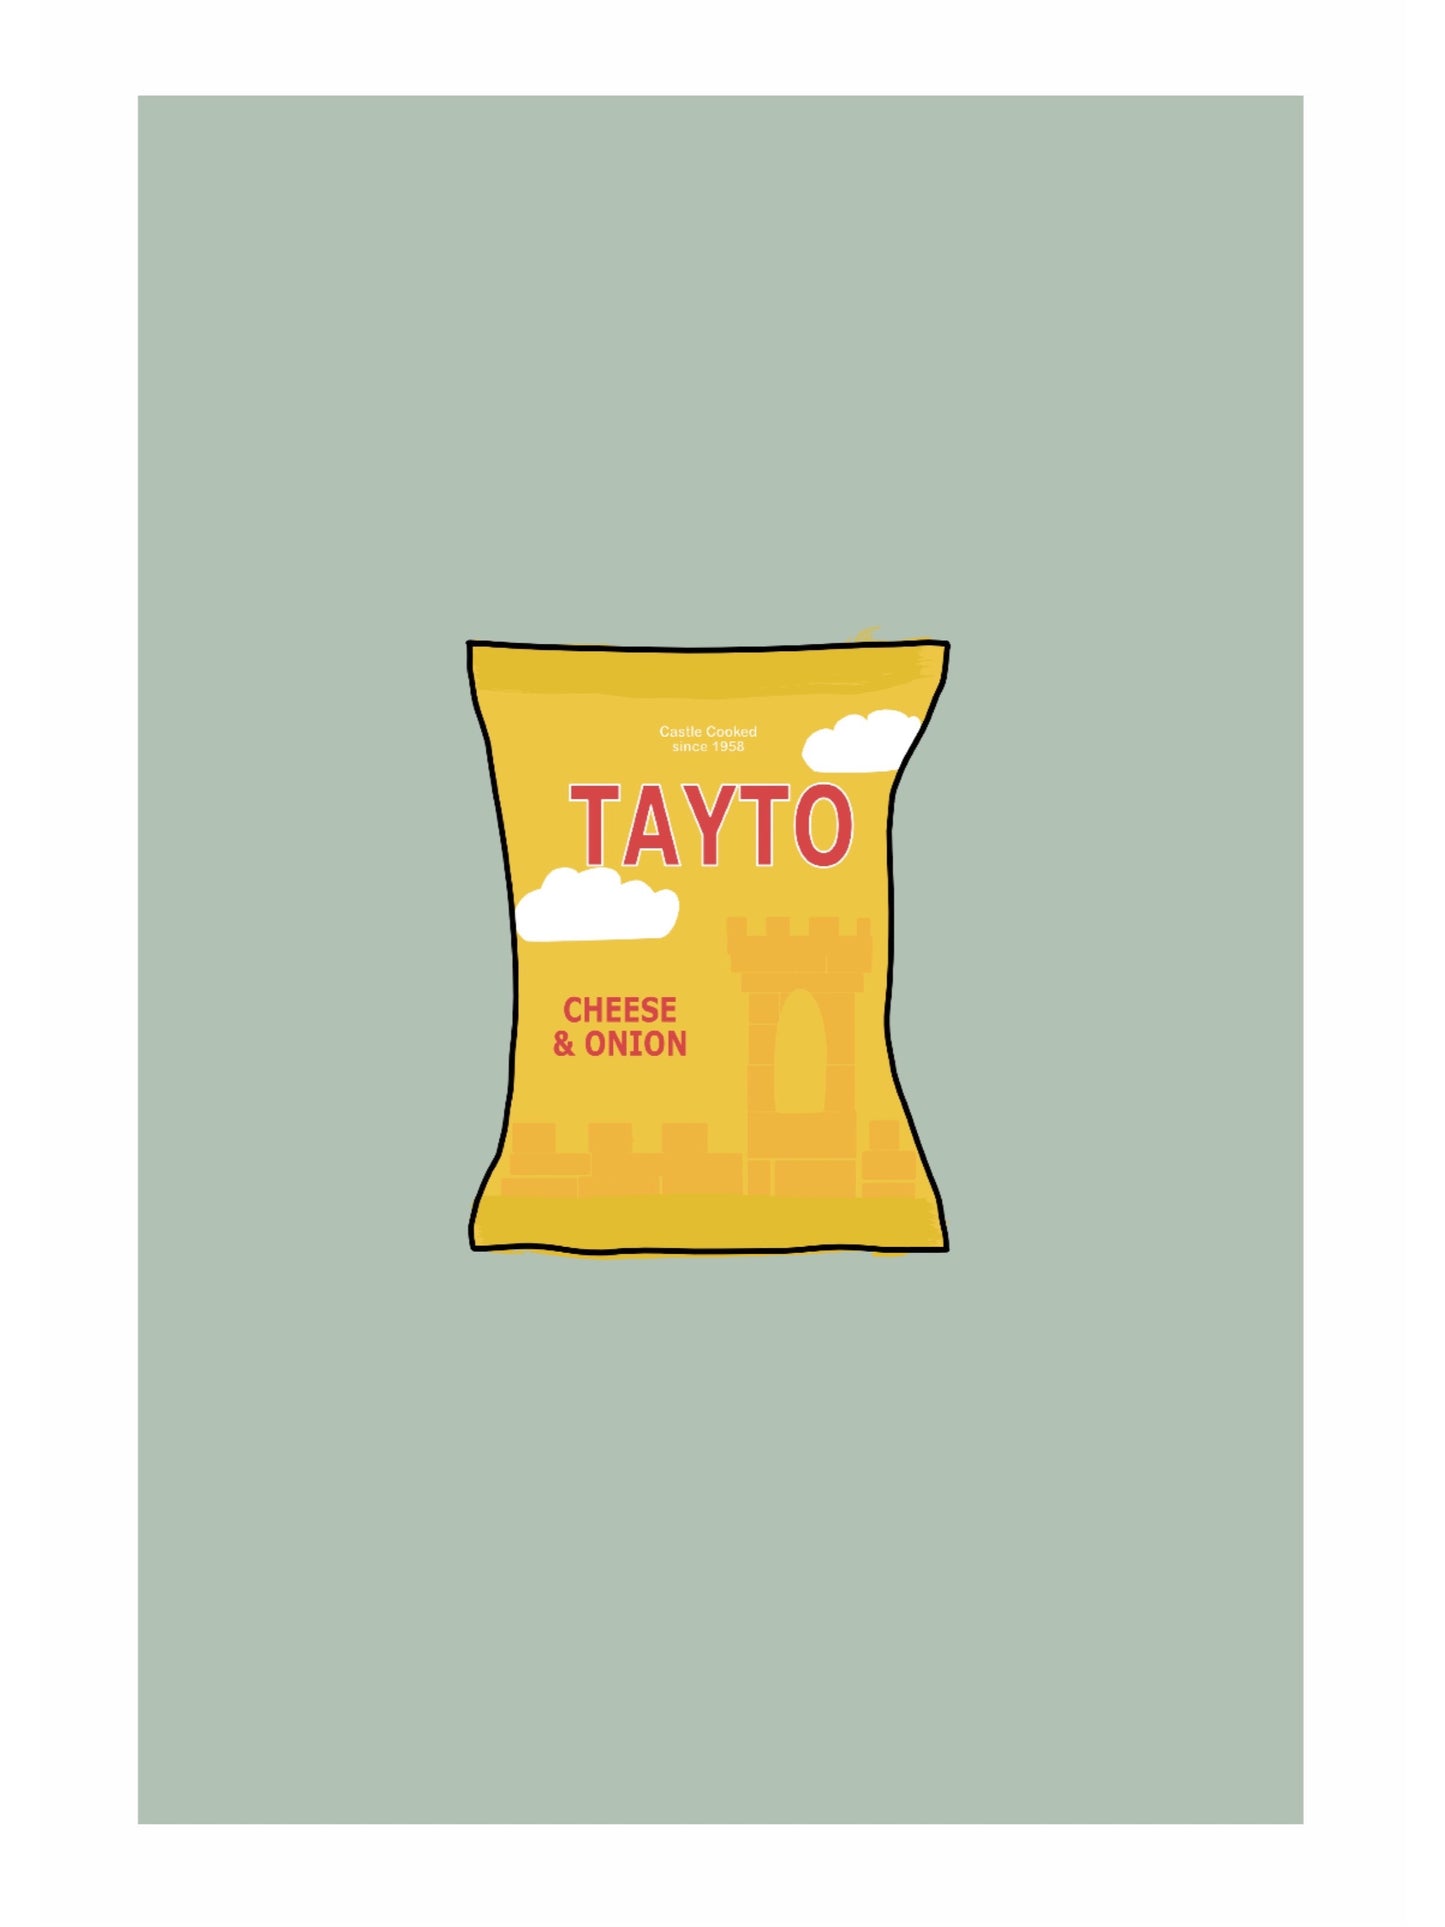 Tayto Cheese & Onion